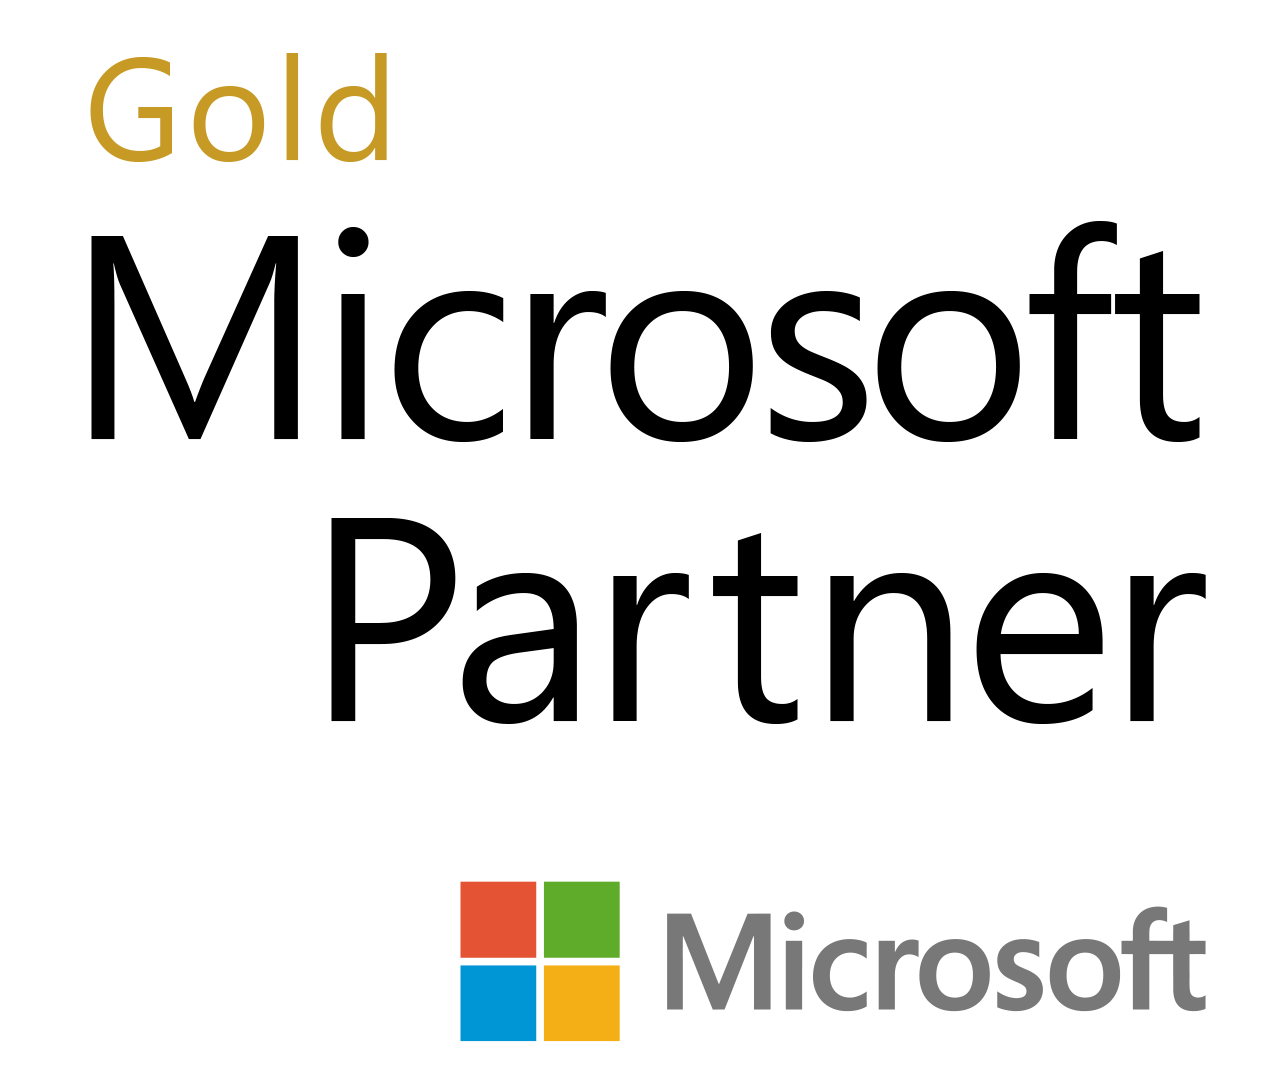 Gold-Microsoft-Partner